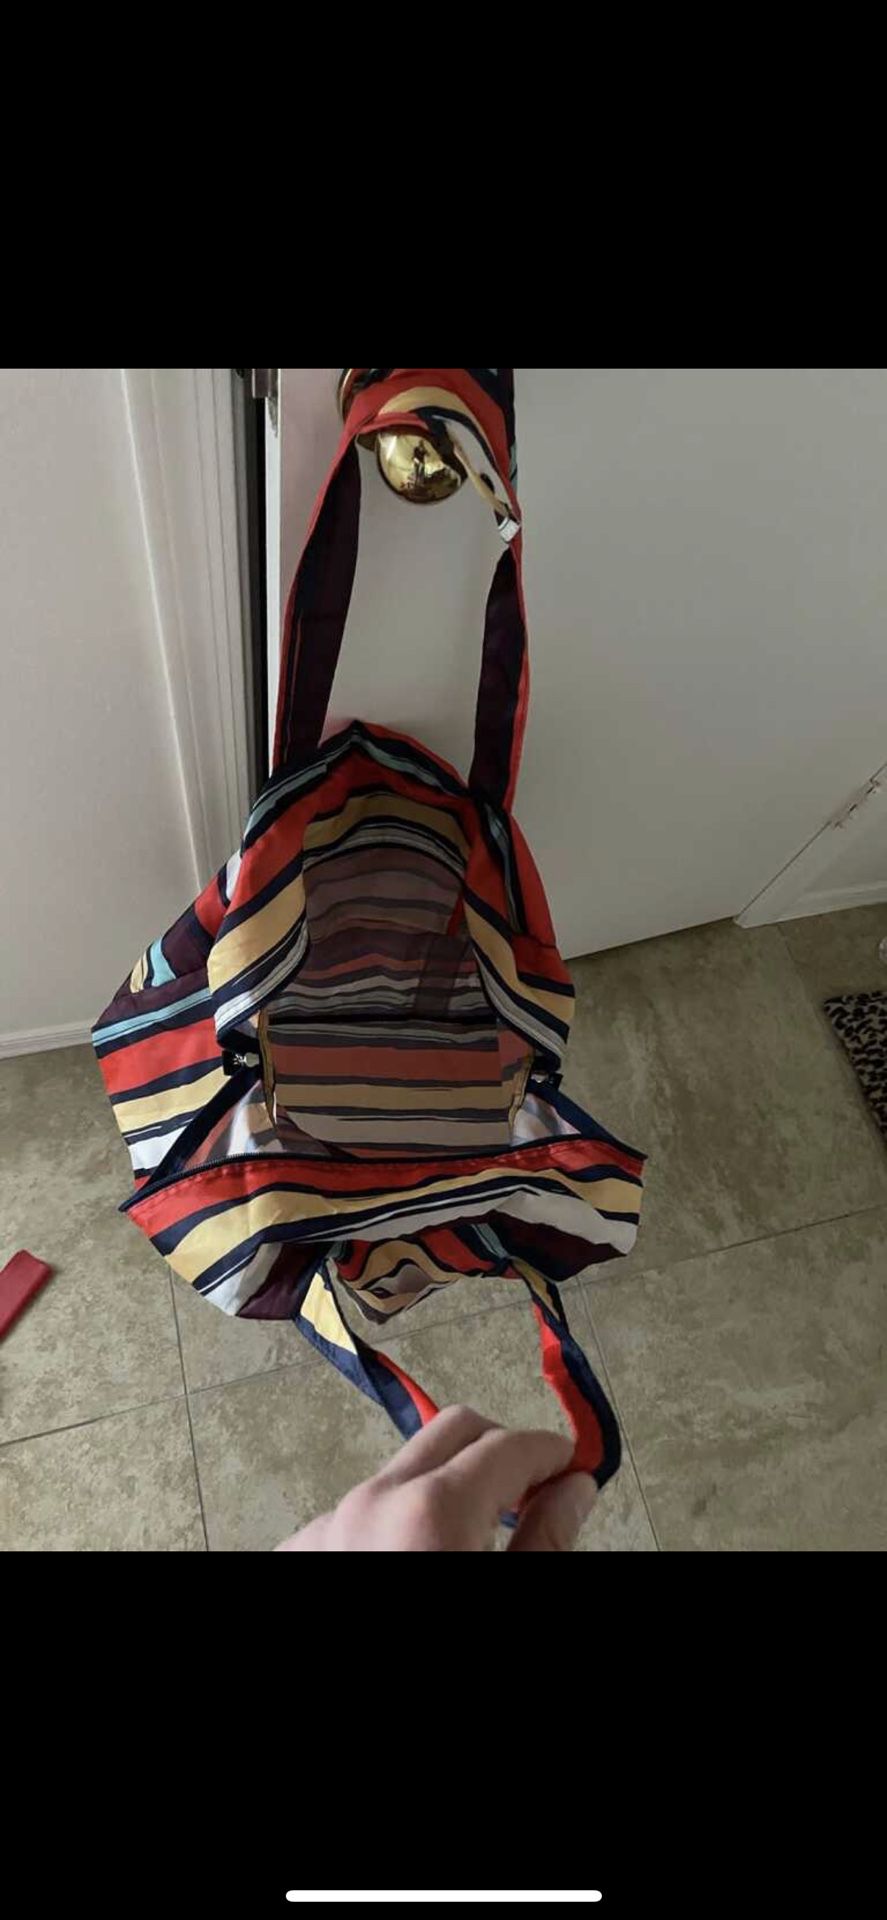 Reisenthel Sunner rainbow colorful lightweight bag that folds up 